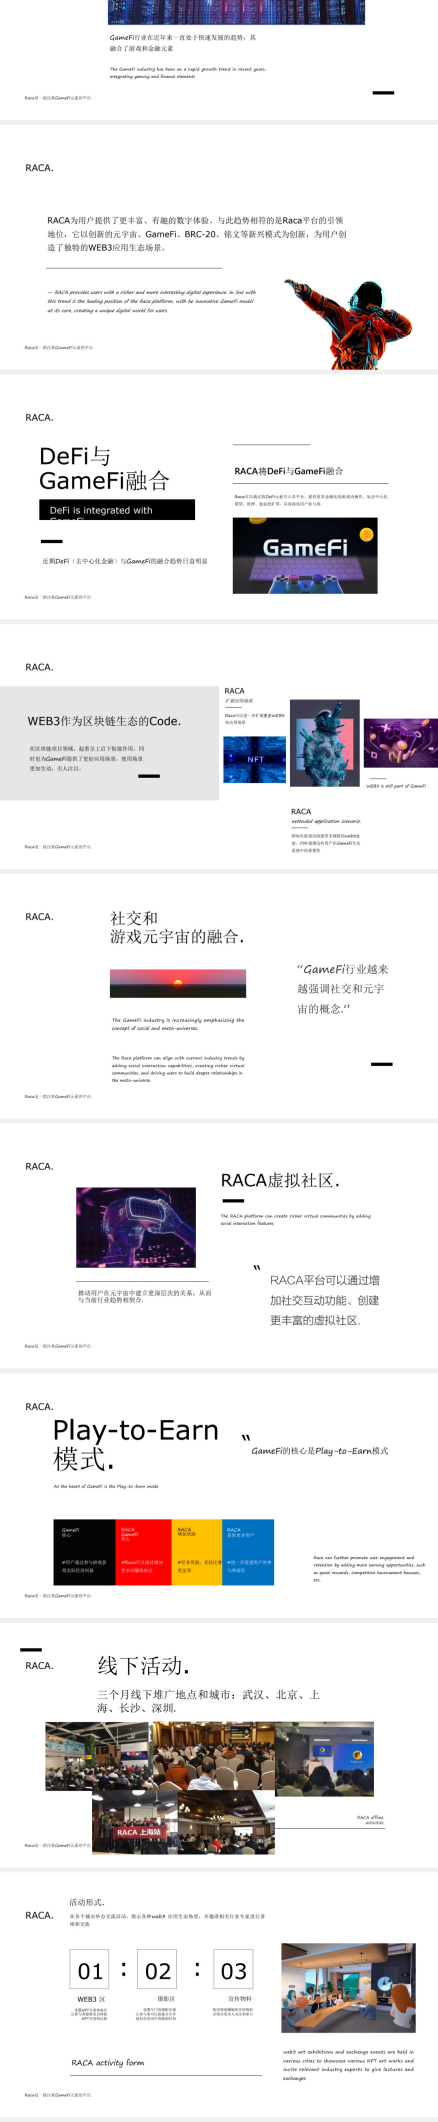 RACA十二月下旬登录中国市场,RACA项目计划书